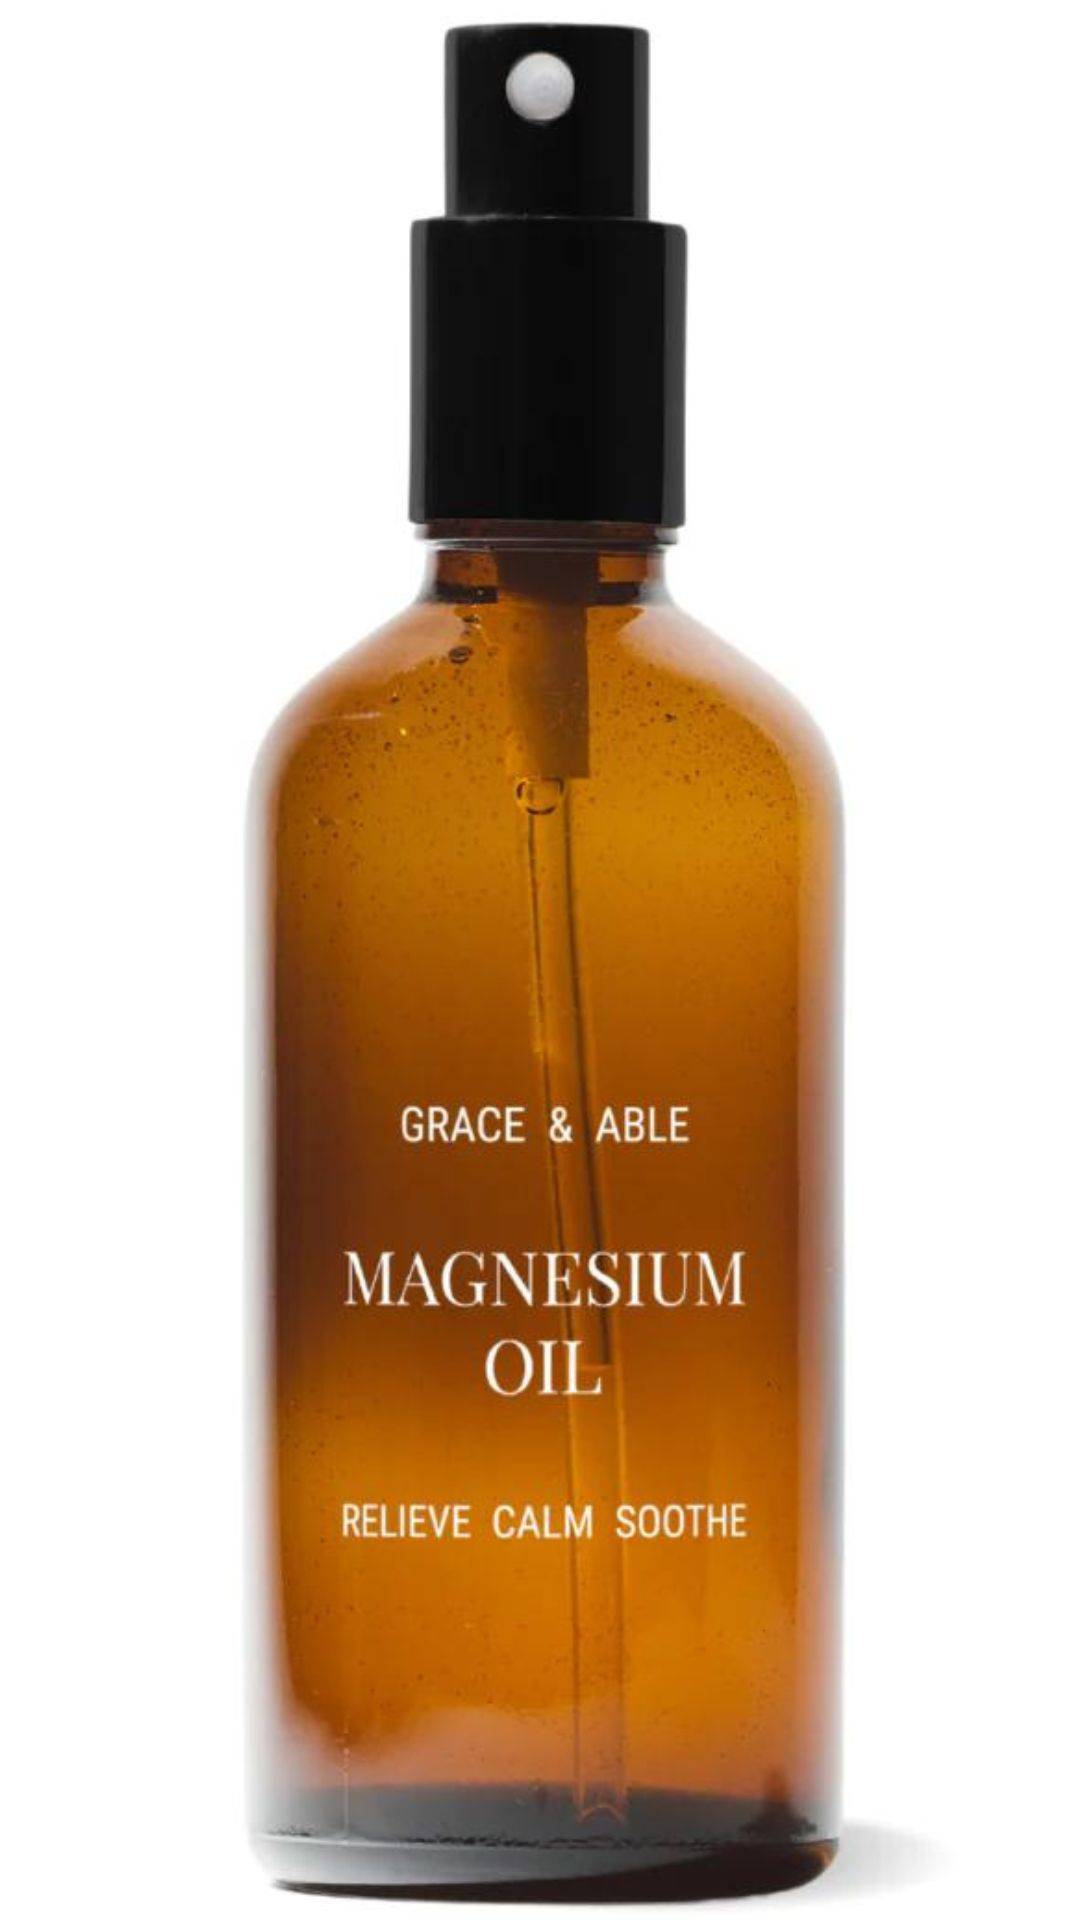 Grace & Able magnesium oil